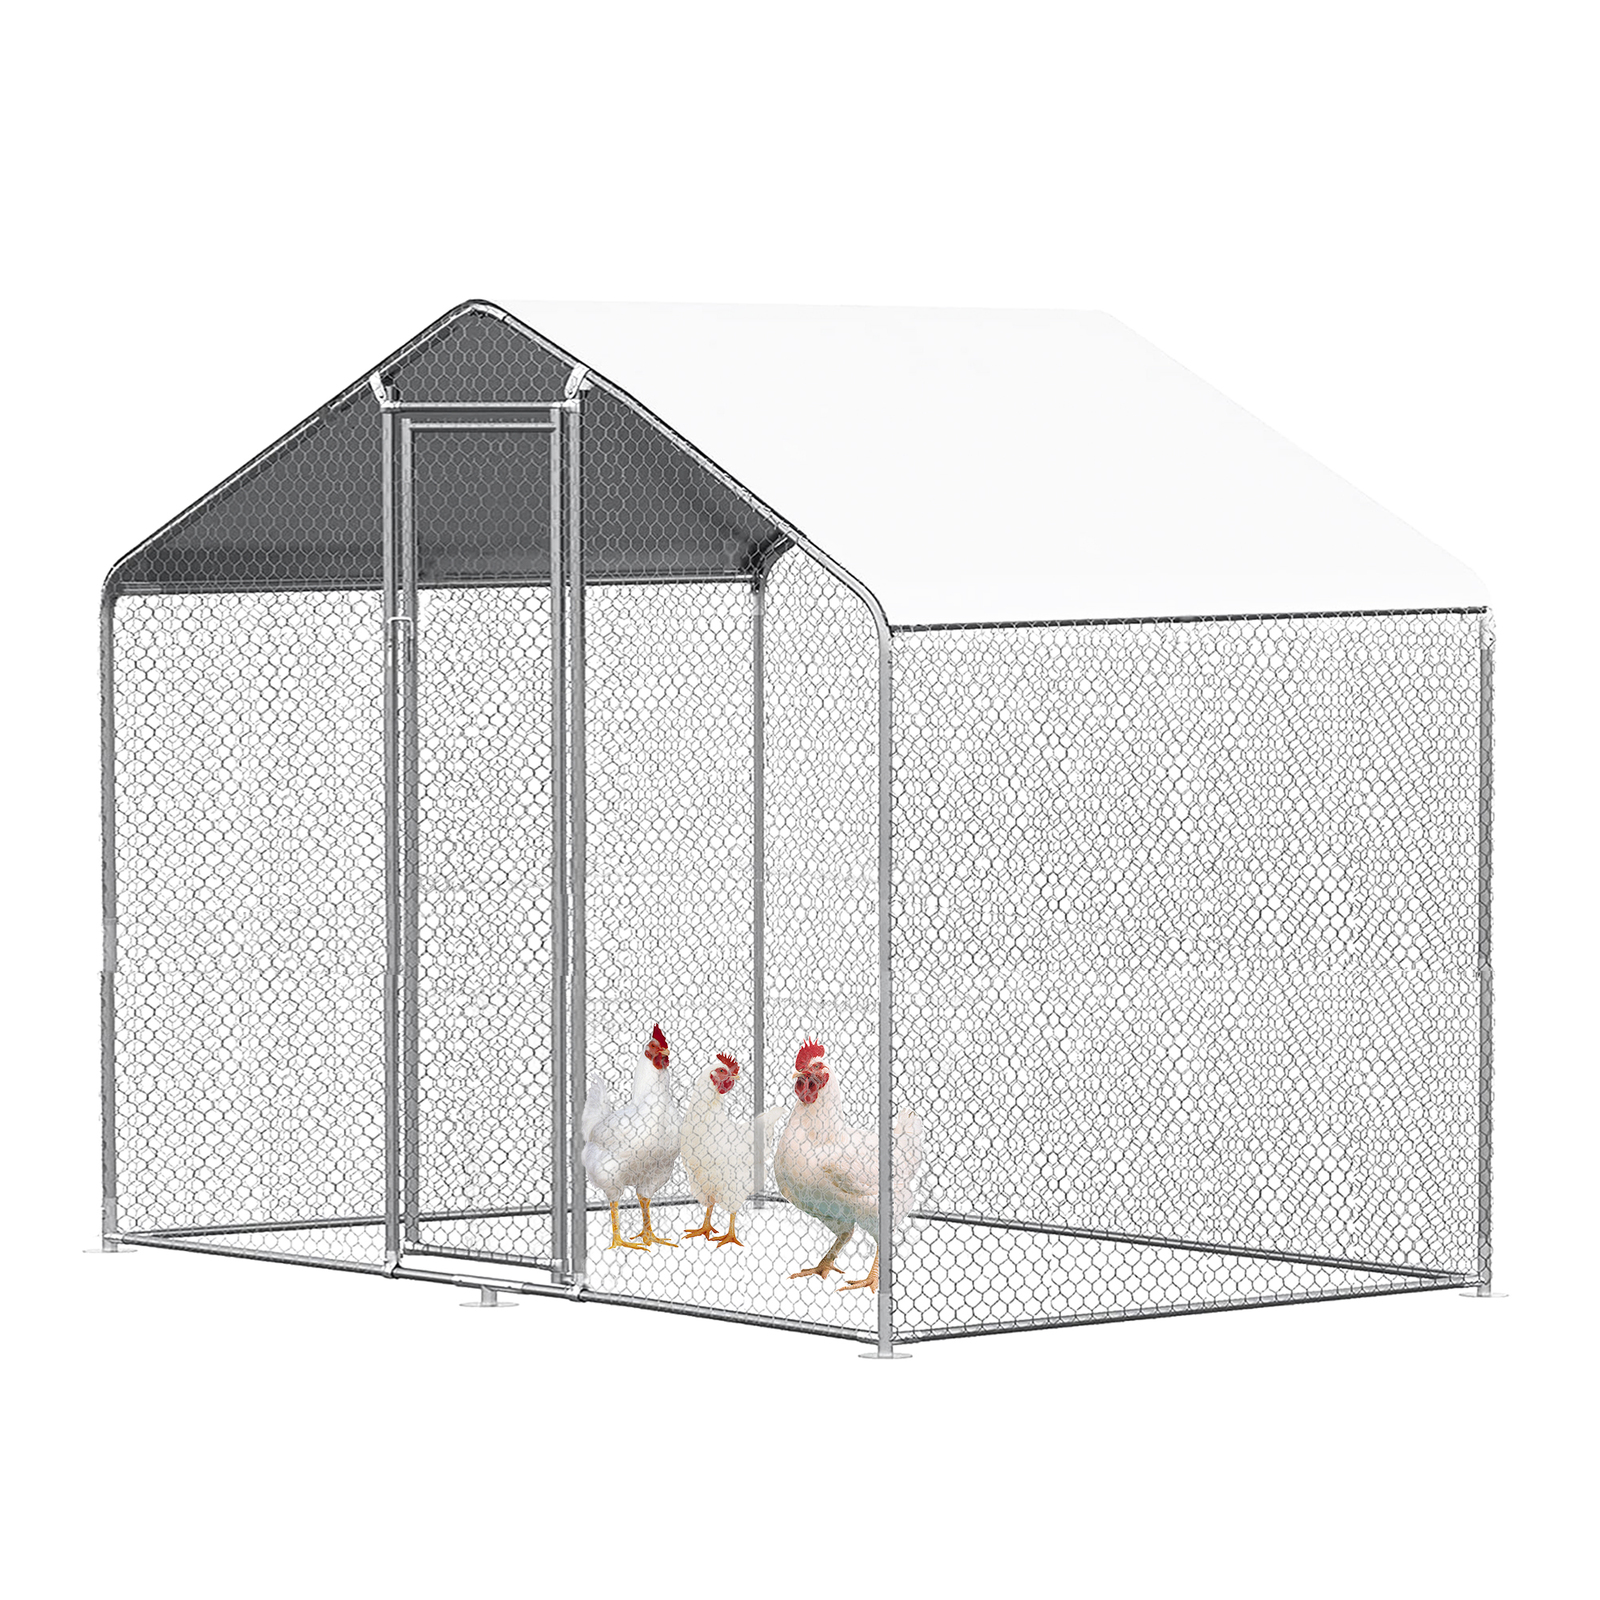 Large Walk-in Pet Chicken Run Coop Cage Rabbit Hutch Ferret House Guinea Pig Enclosure 300 x 200 x 195cm